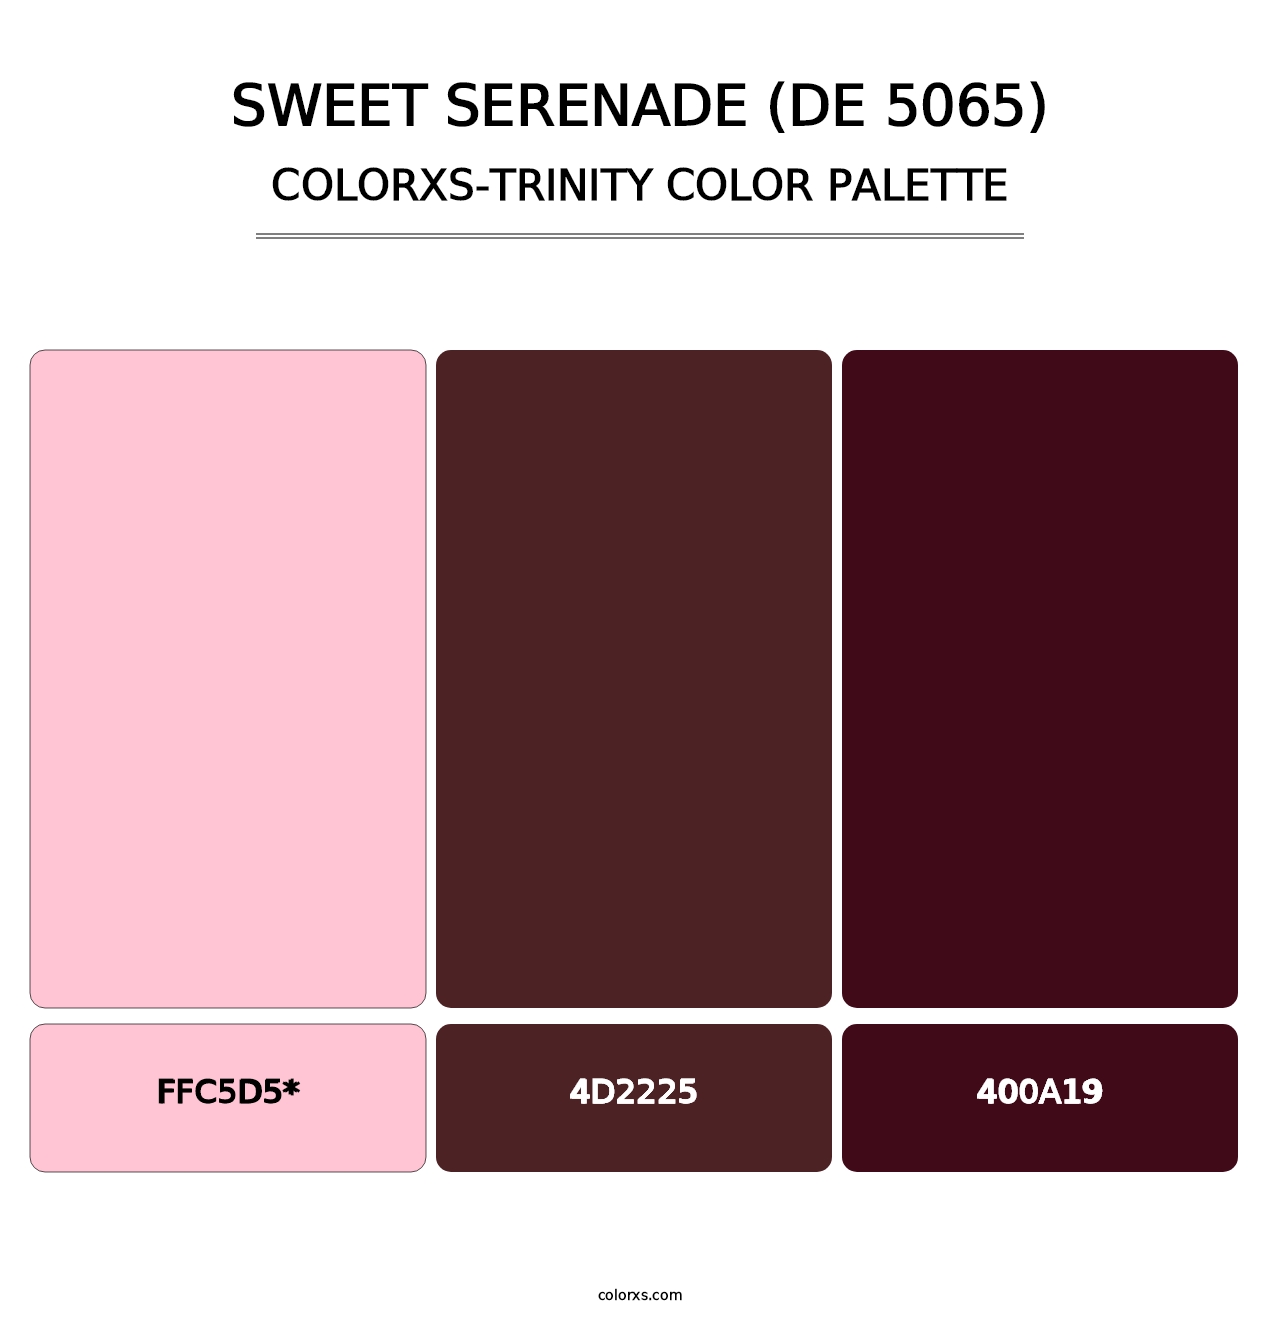 Sweet Serenade (DE 5065) - Colorxs Trinity Palette